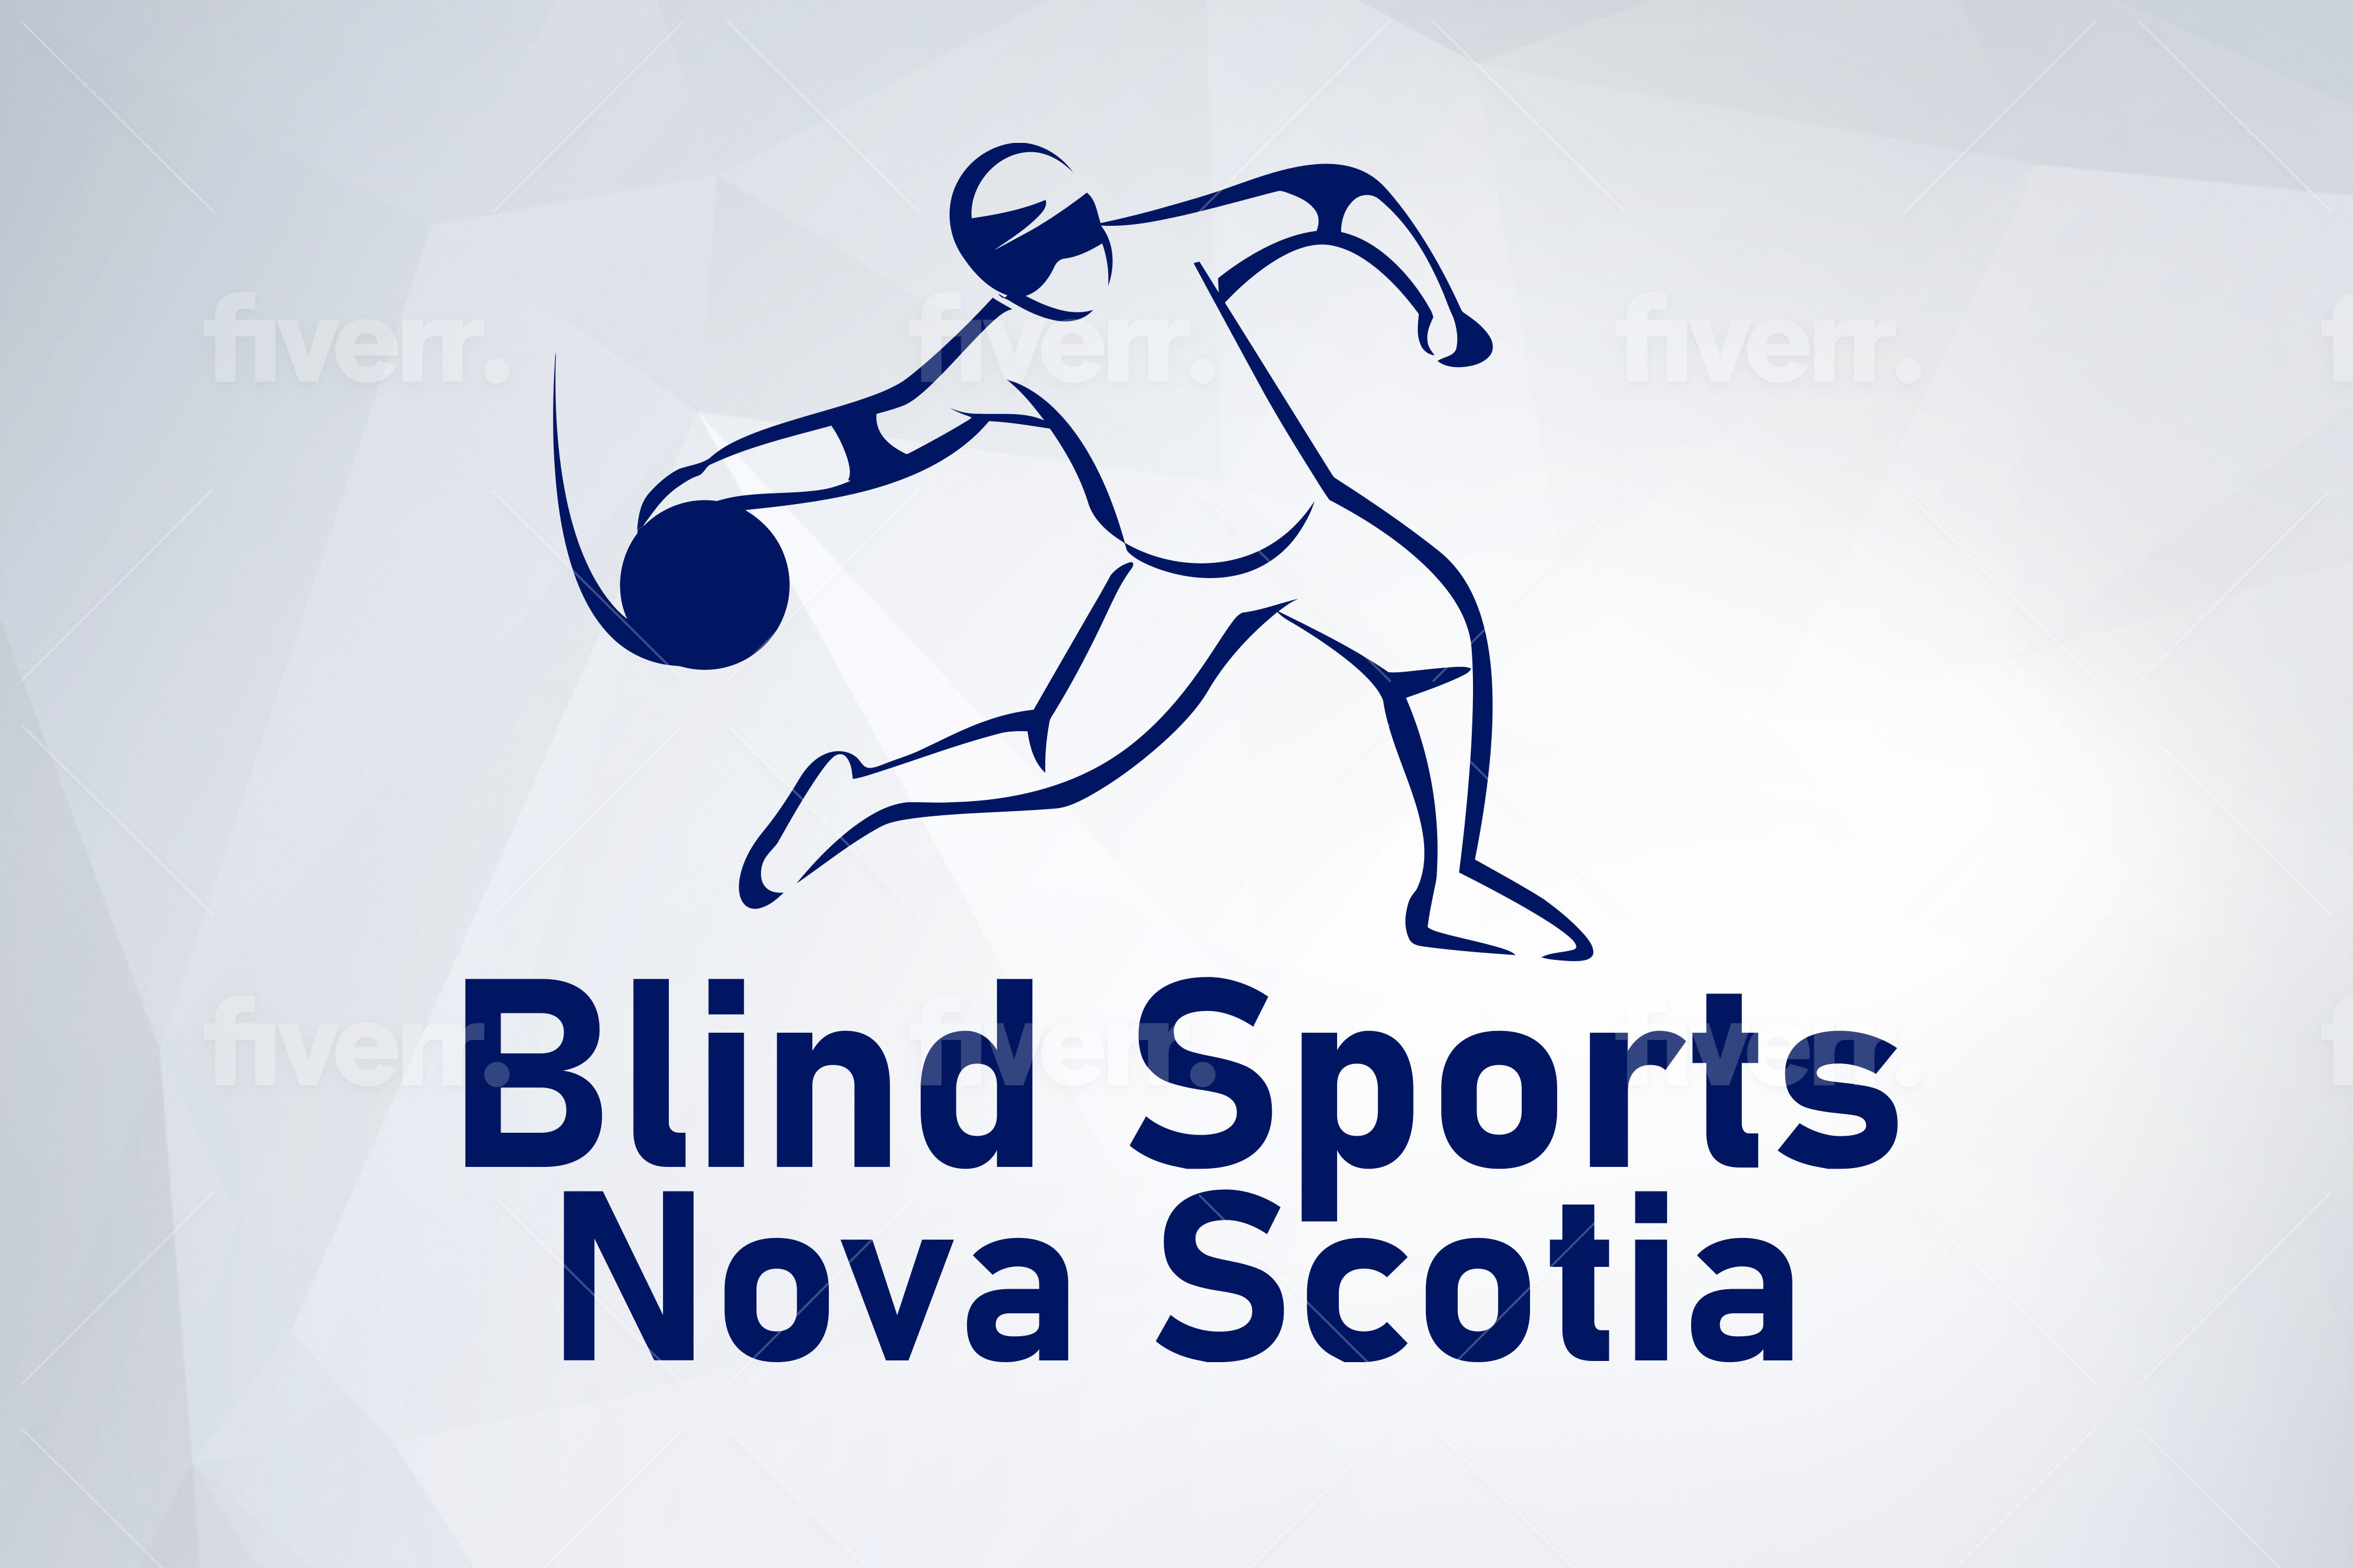  Blind Sports Nova Scotia logo, including outline of person throwing a goalball